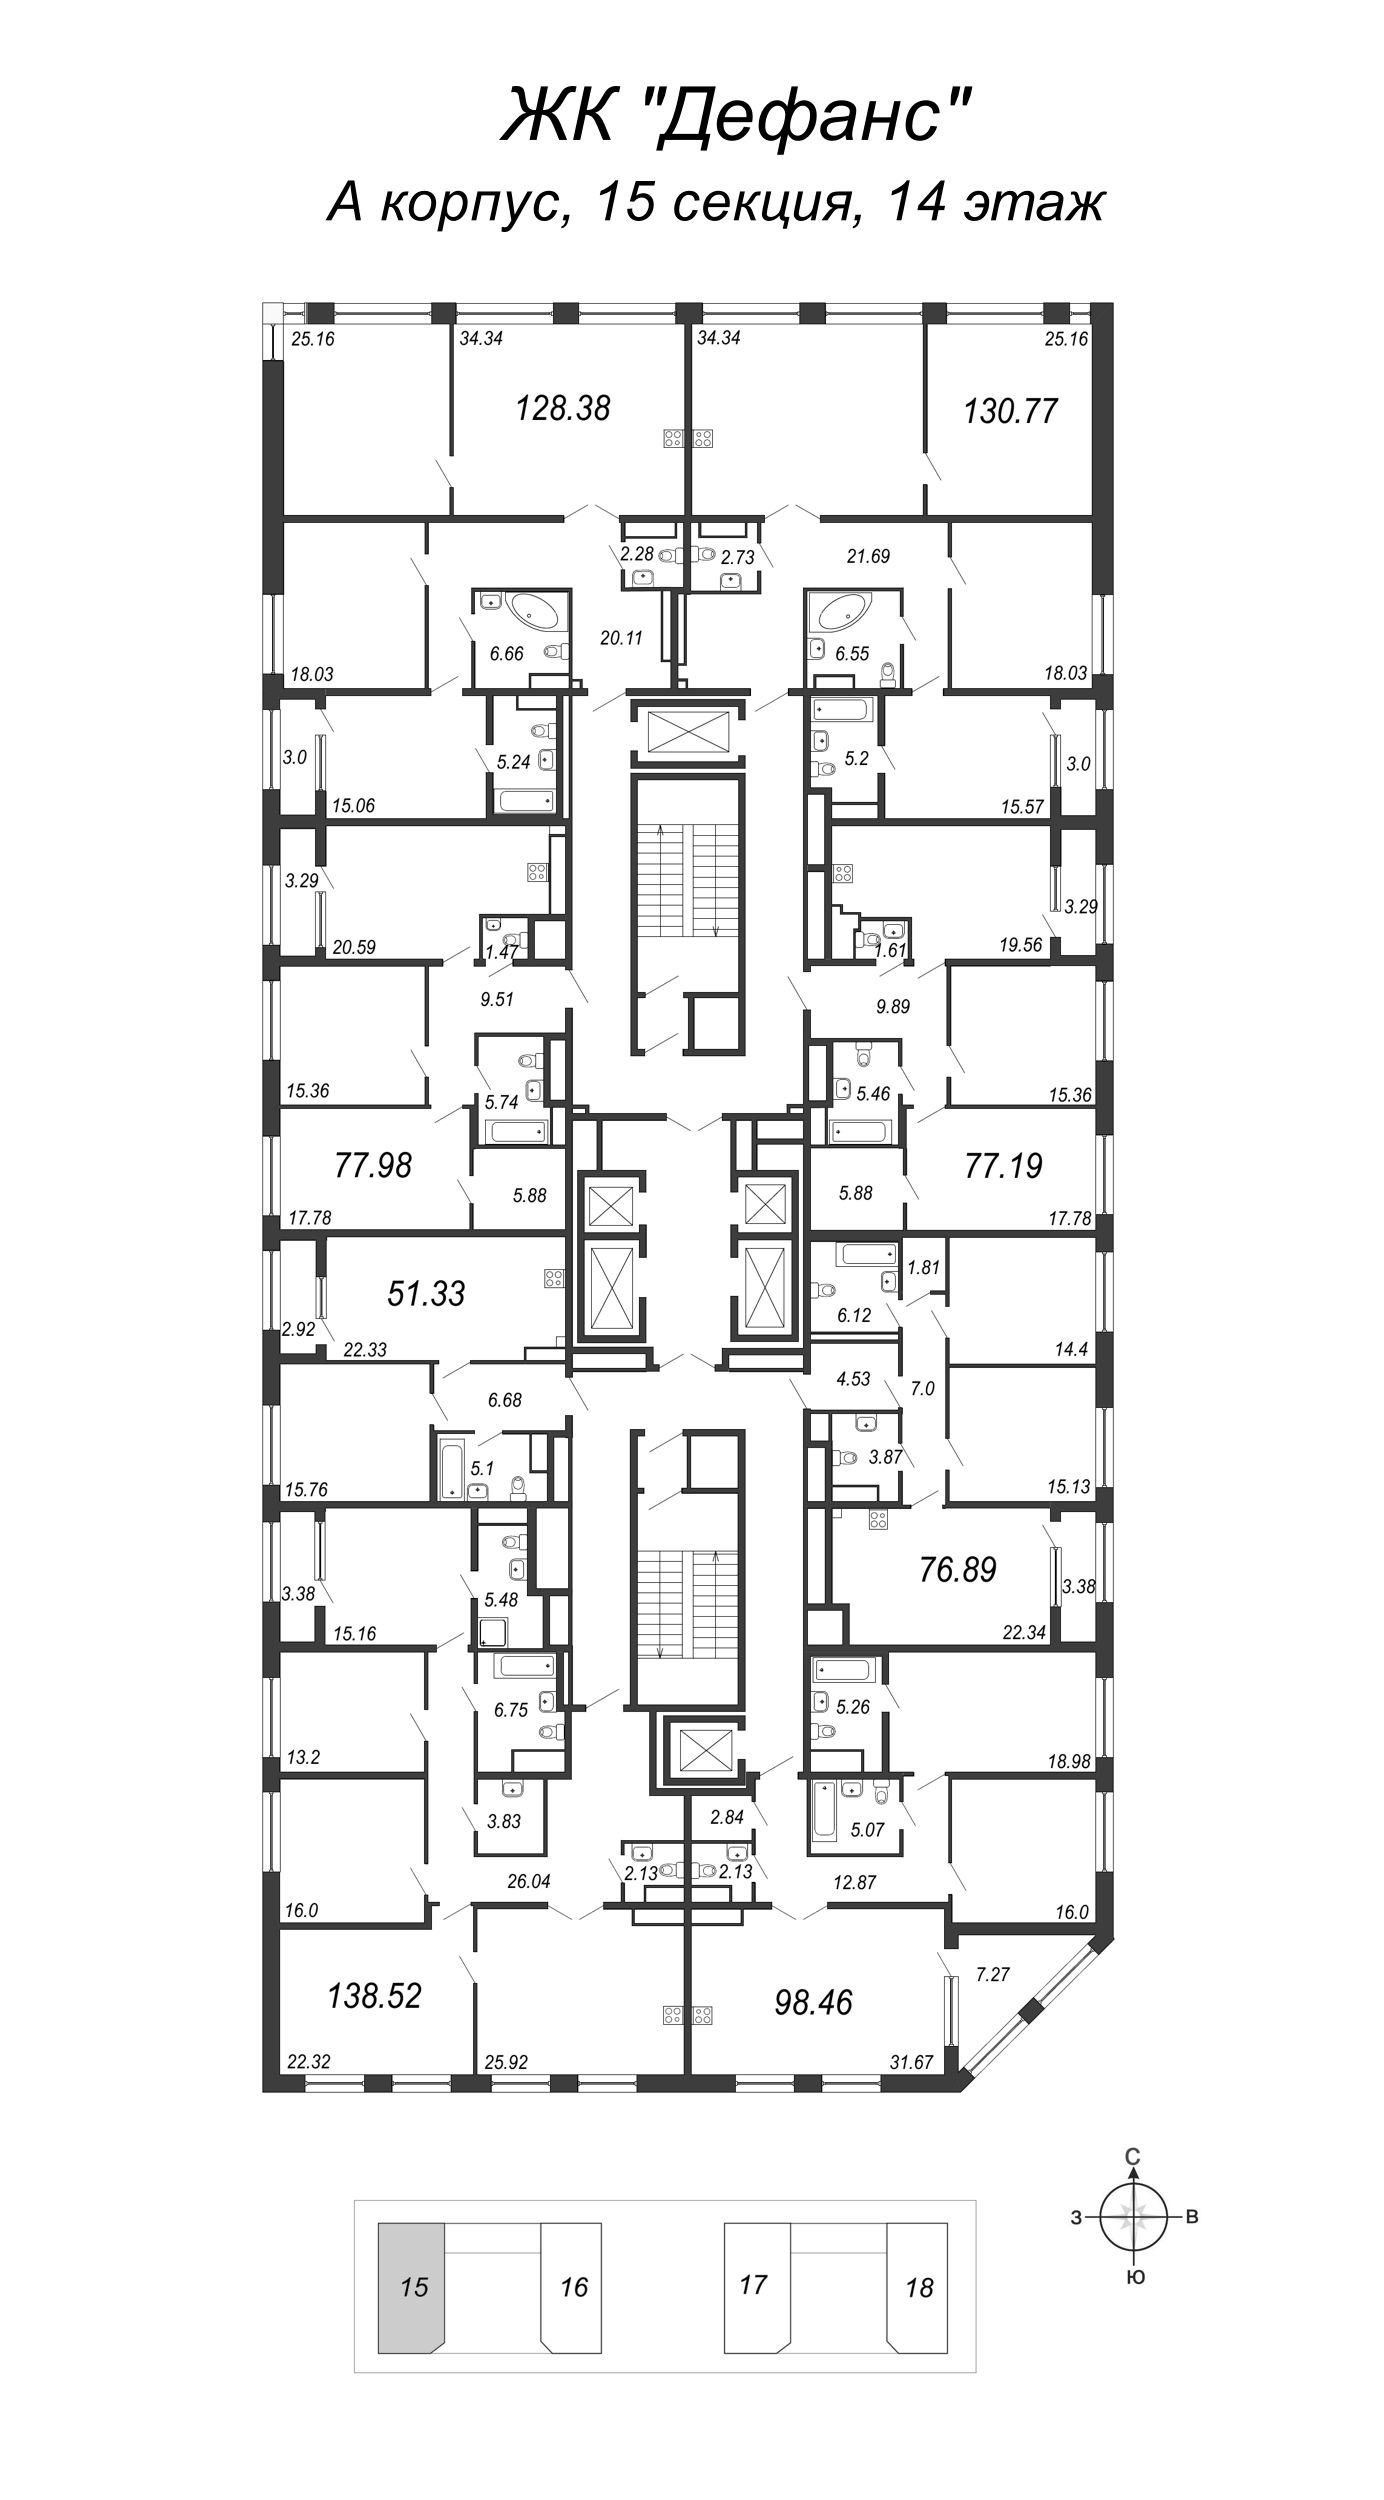 3-комнатная (Евро) квартира, 77.19 м² - планировка этажа